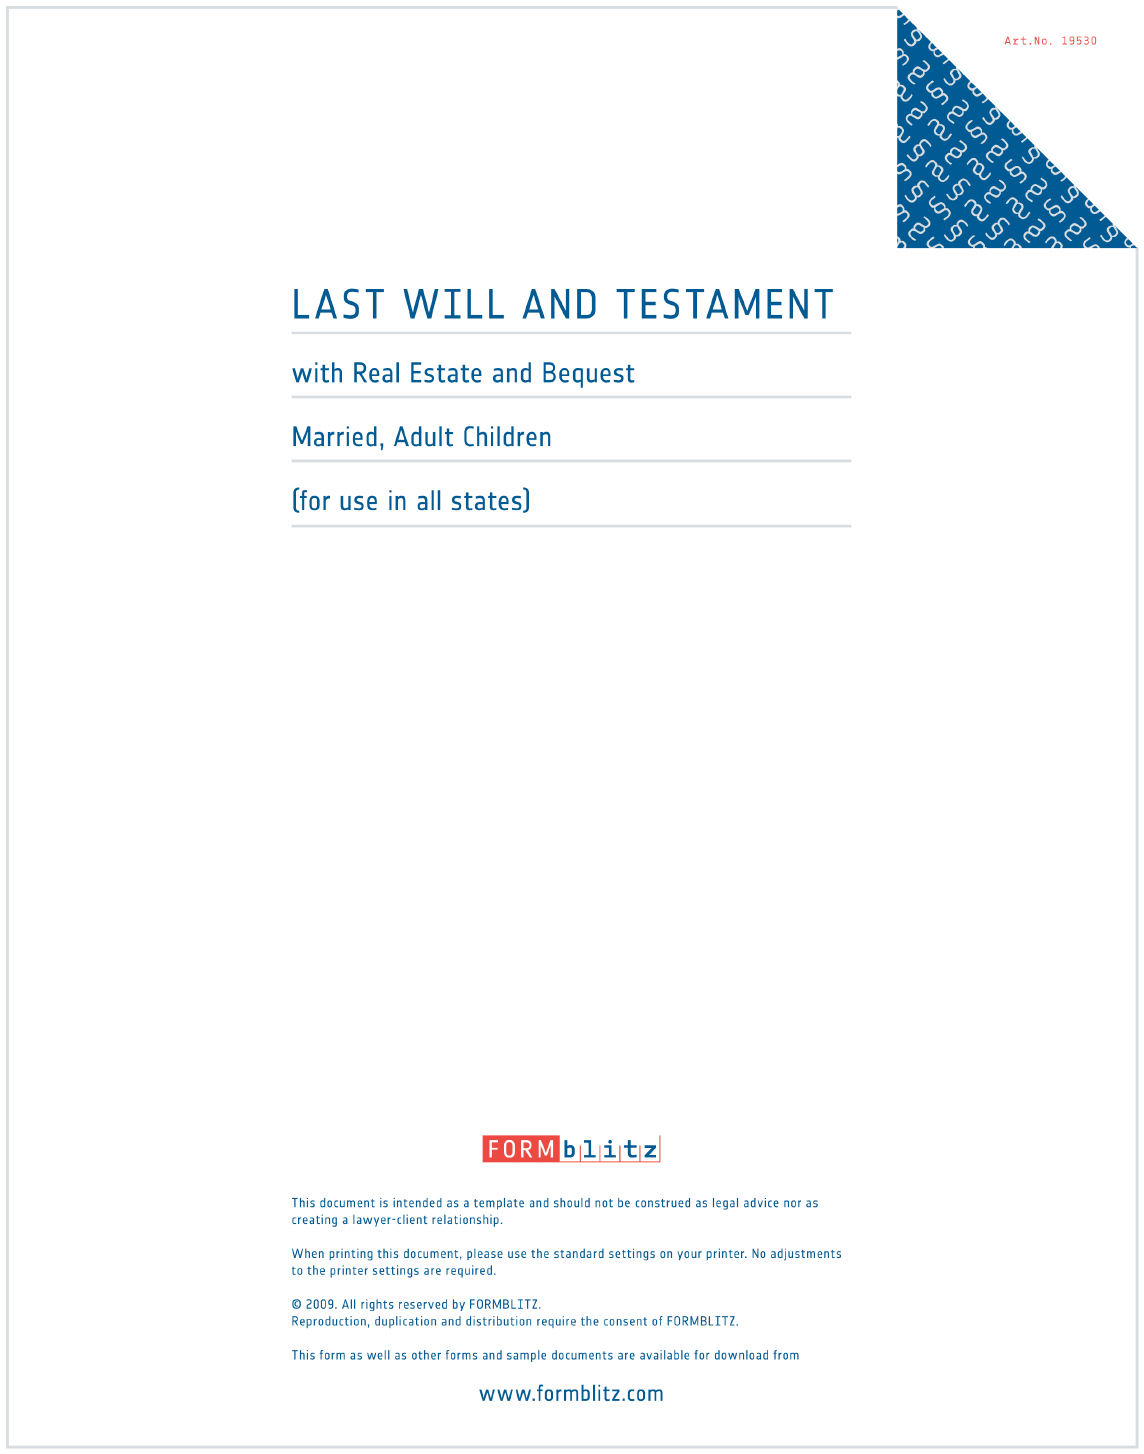 Massachusetts Last Will and Testament Form